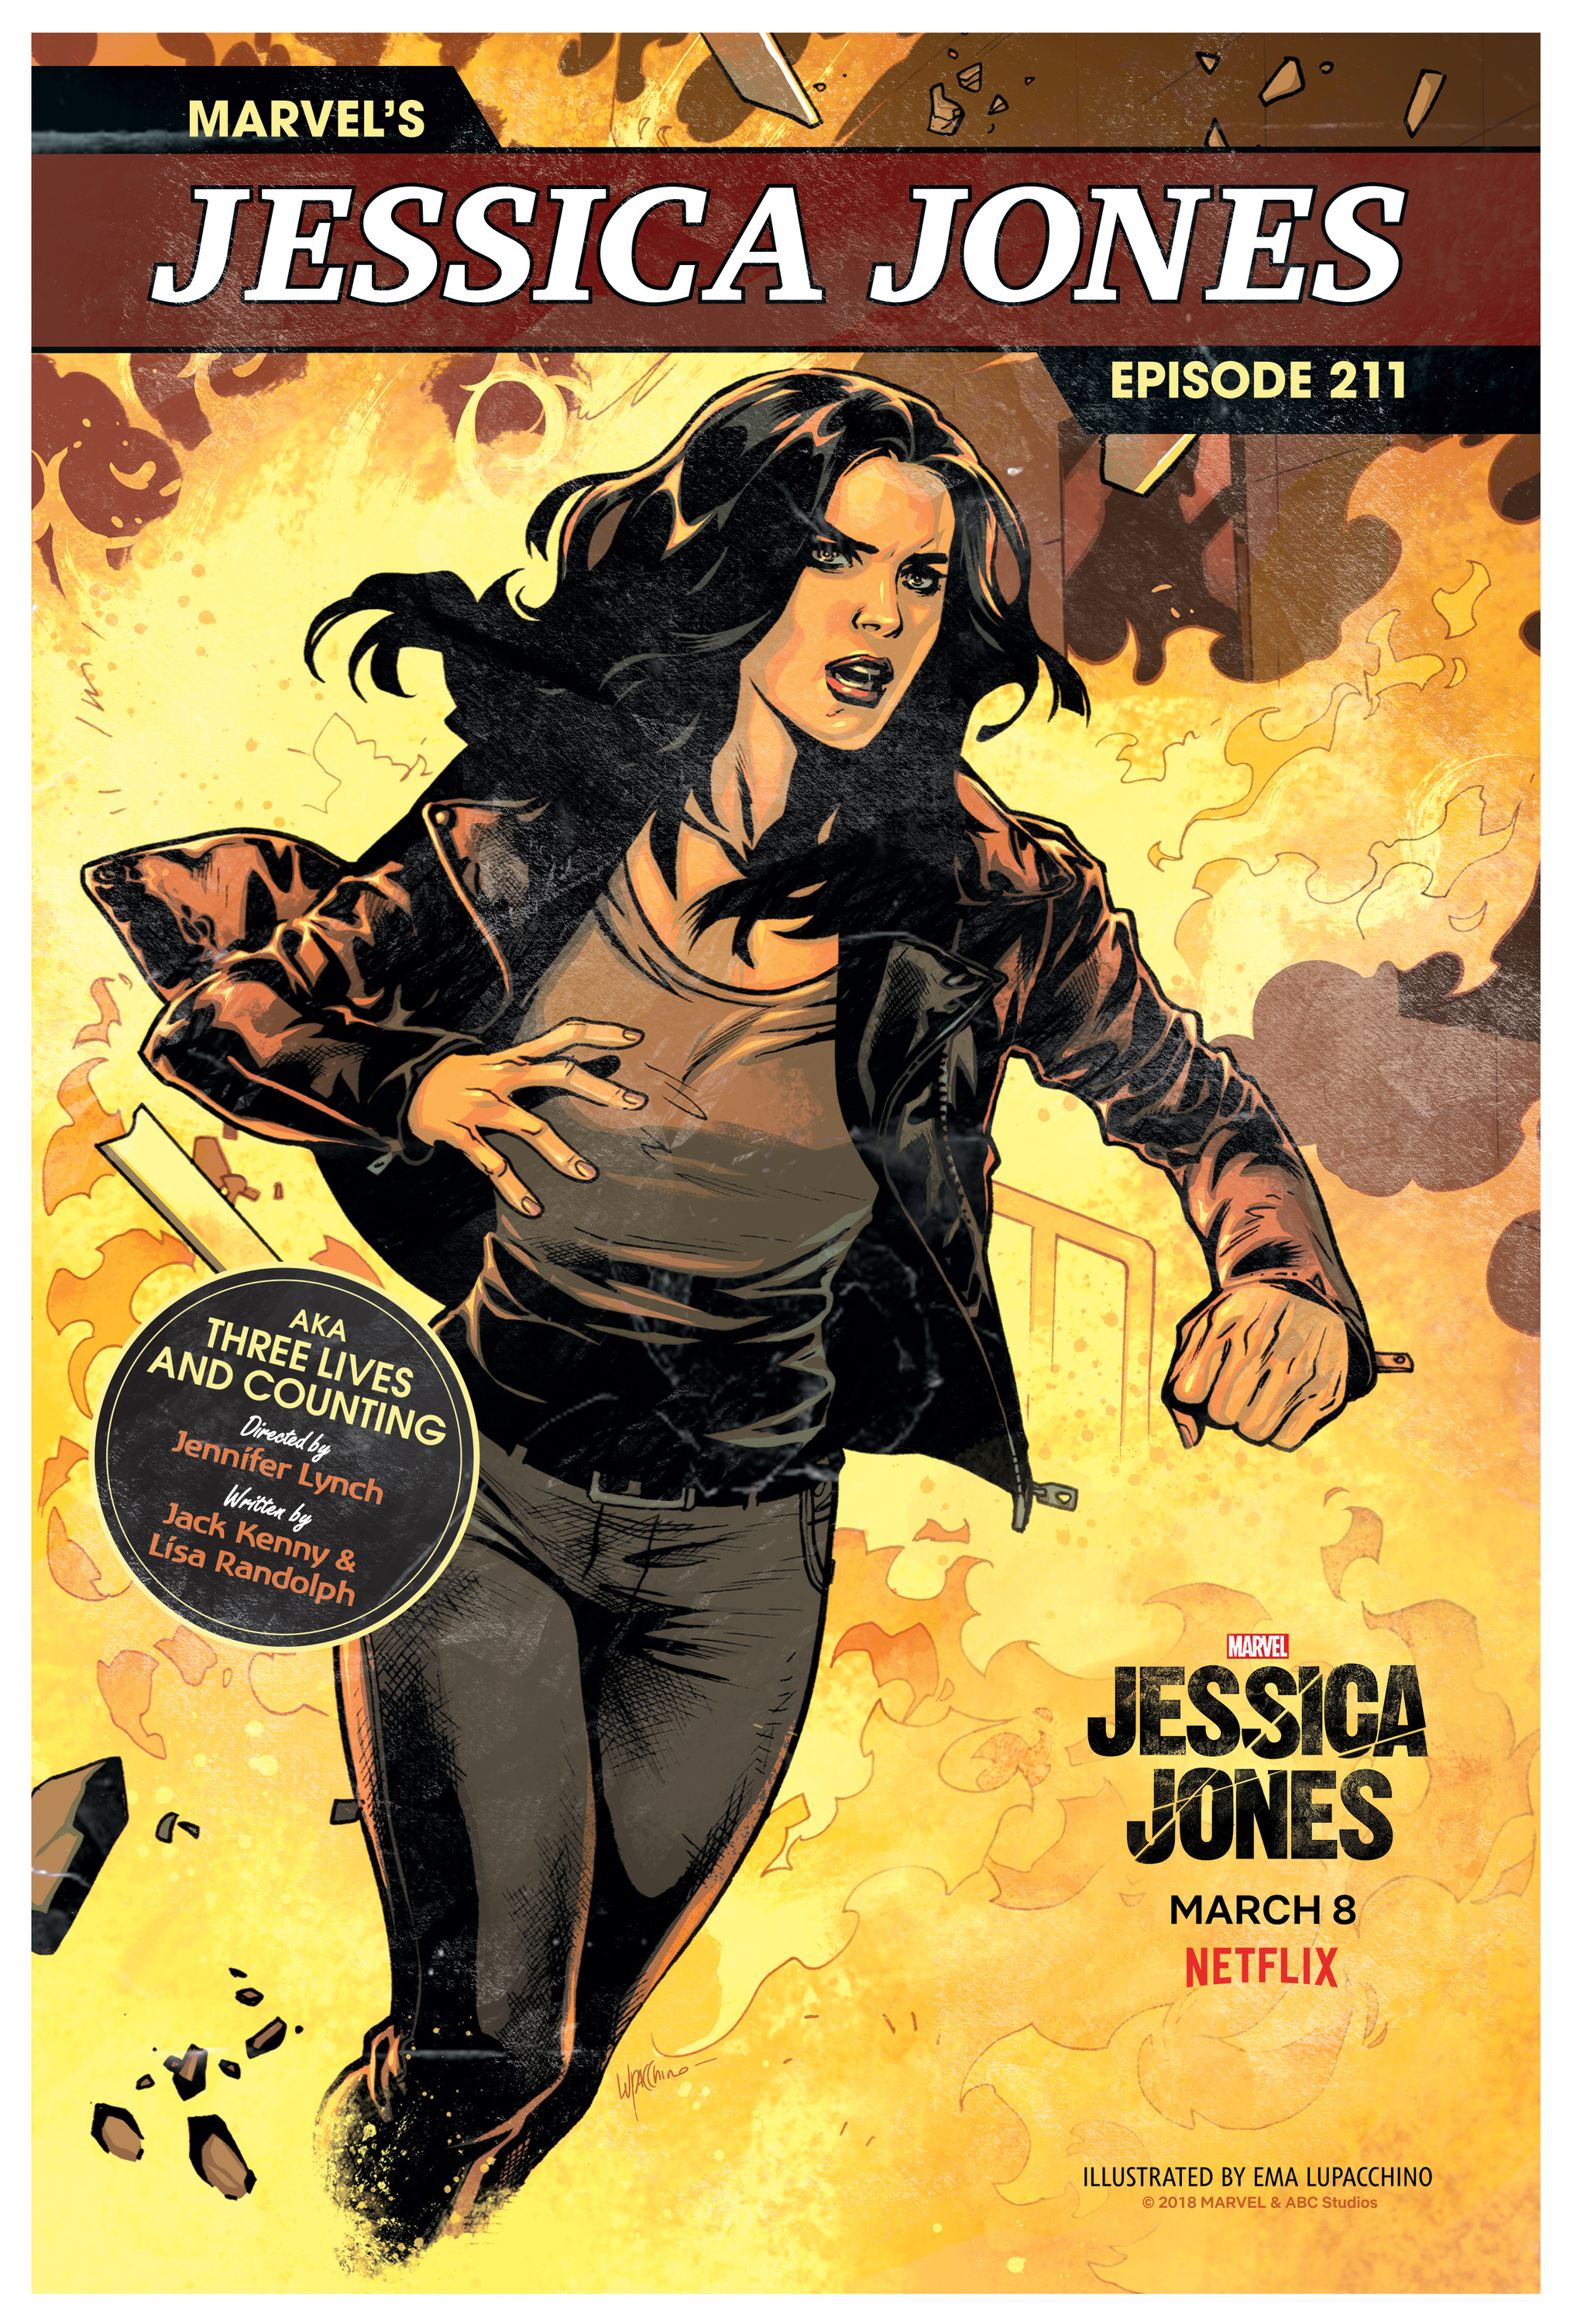 Mega Sized TV Poster Image for Jessica Jones (#17 of 21)